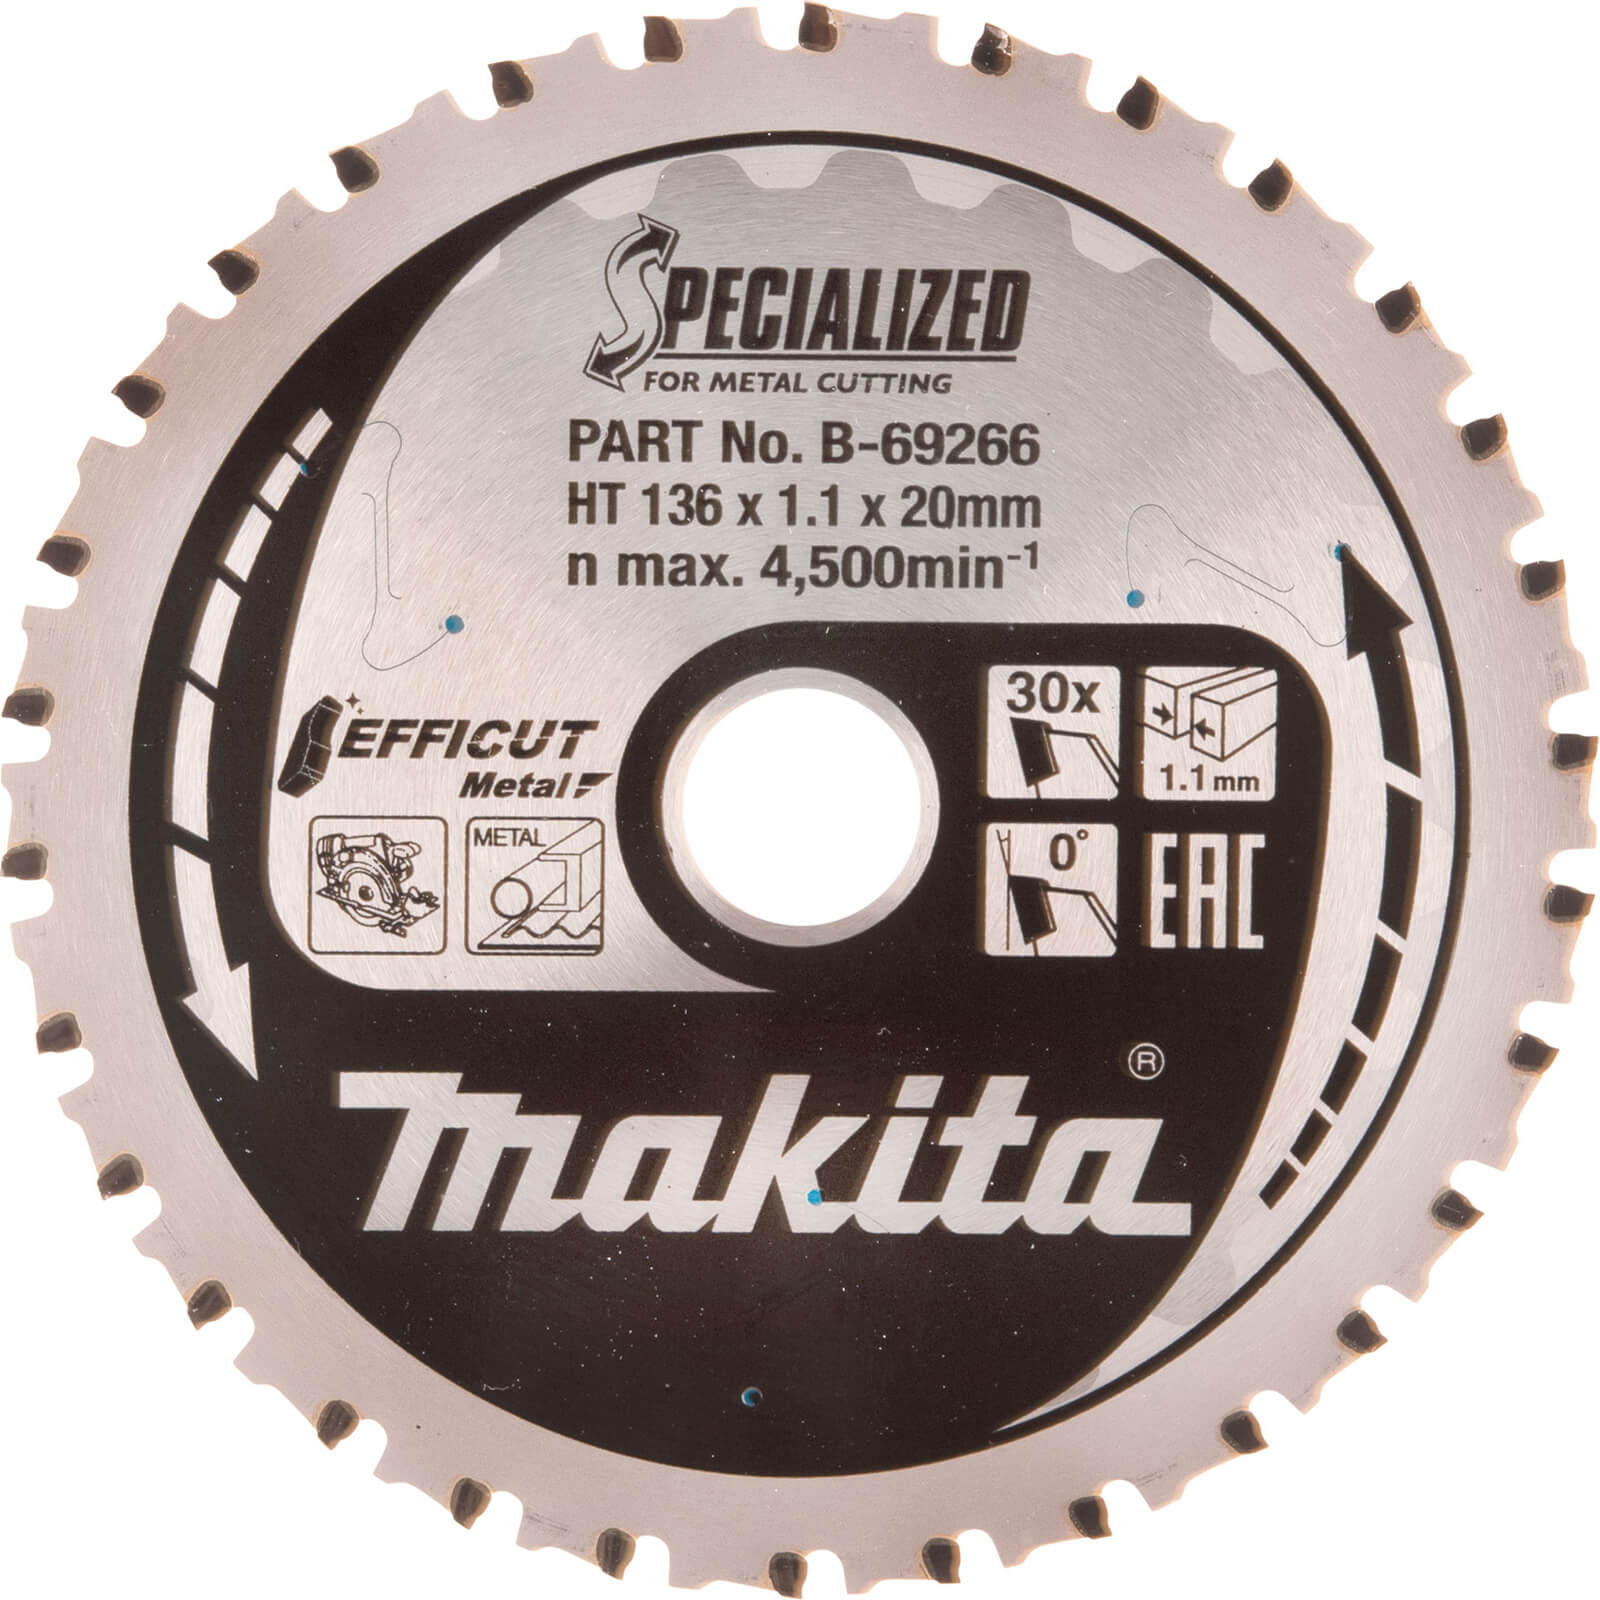 Image of Makita SPECIALIZED Efficut Metal Circular Saw Blade 136mm 30T 20mm